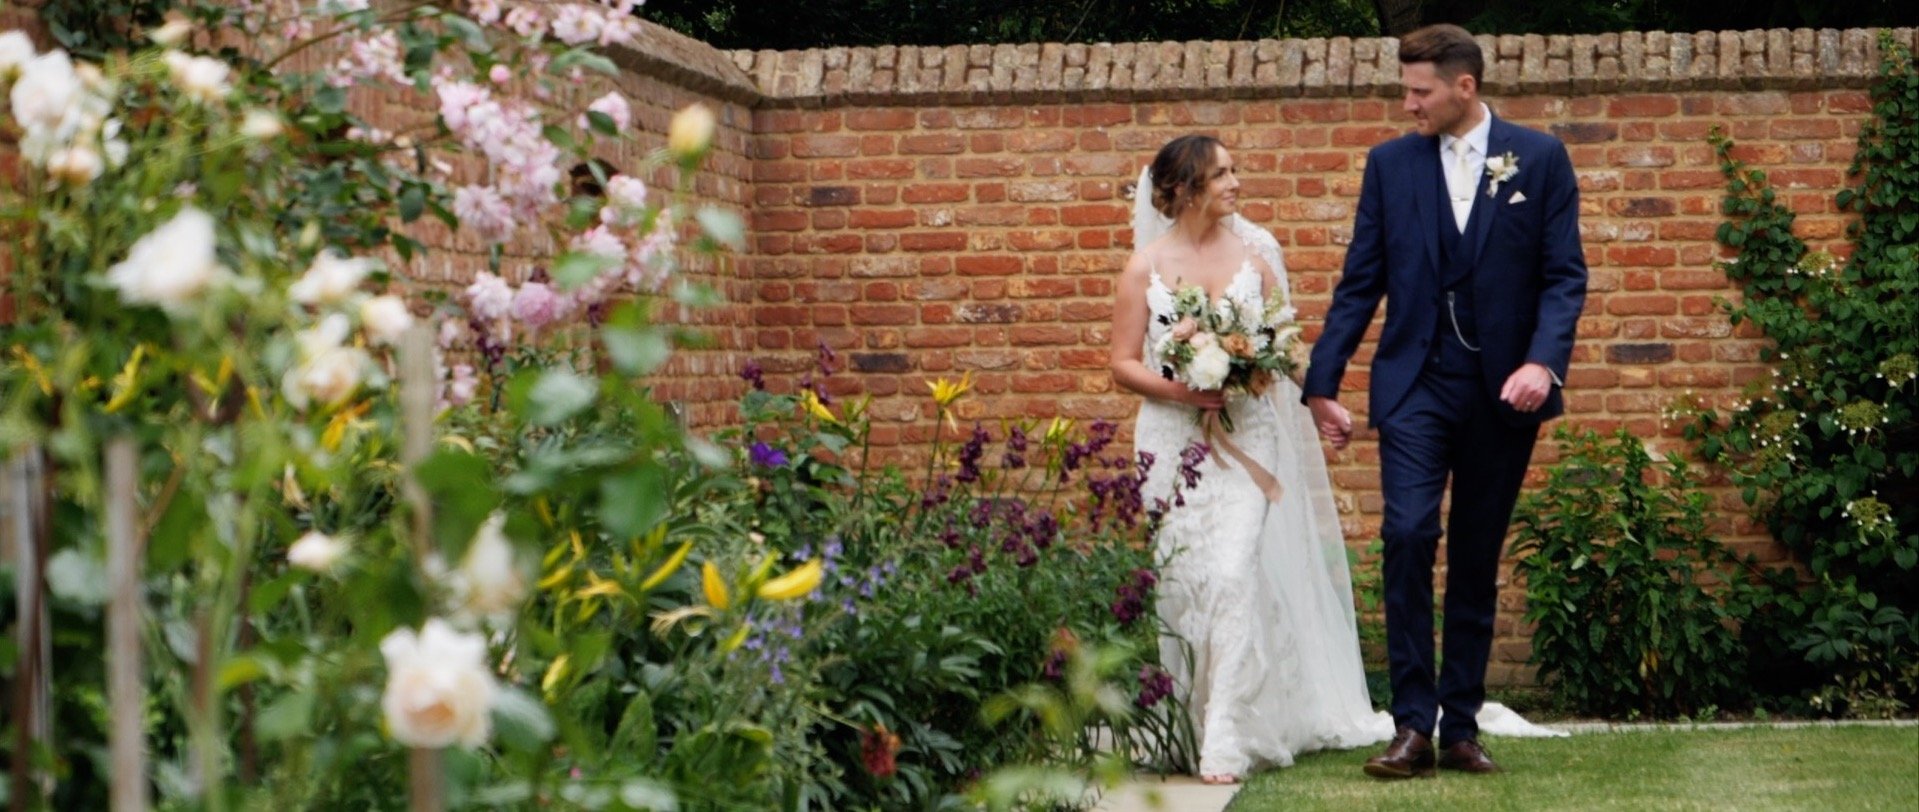 Apton Hall stunning couple wedding video - 3 Cheers Media.jpg